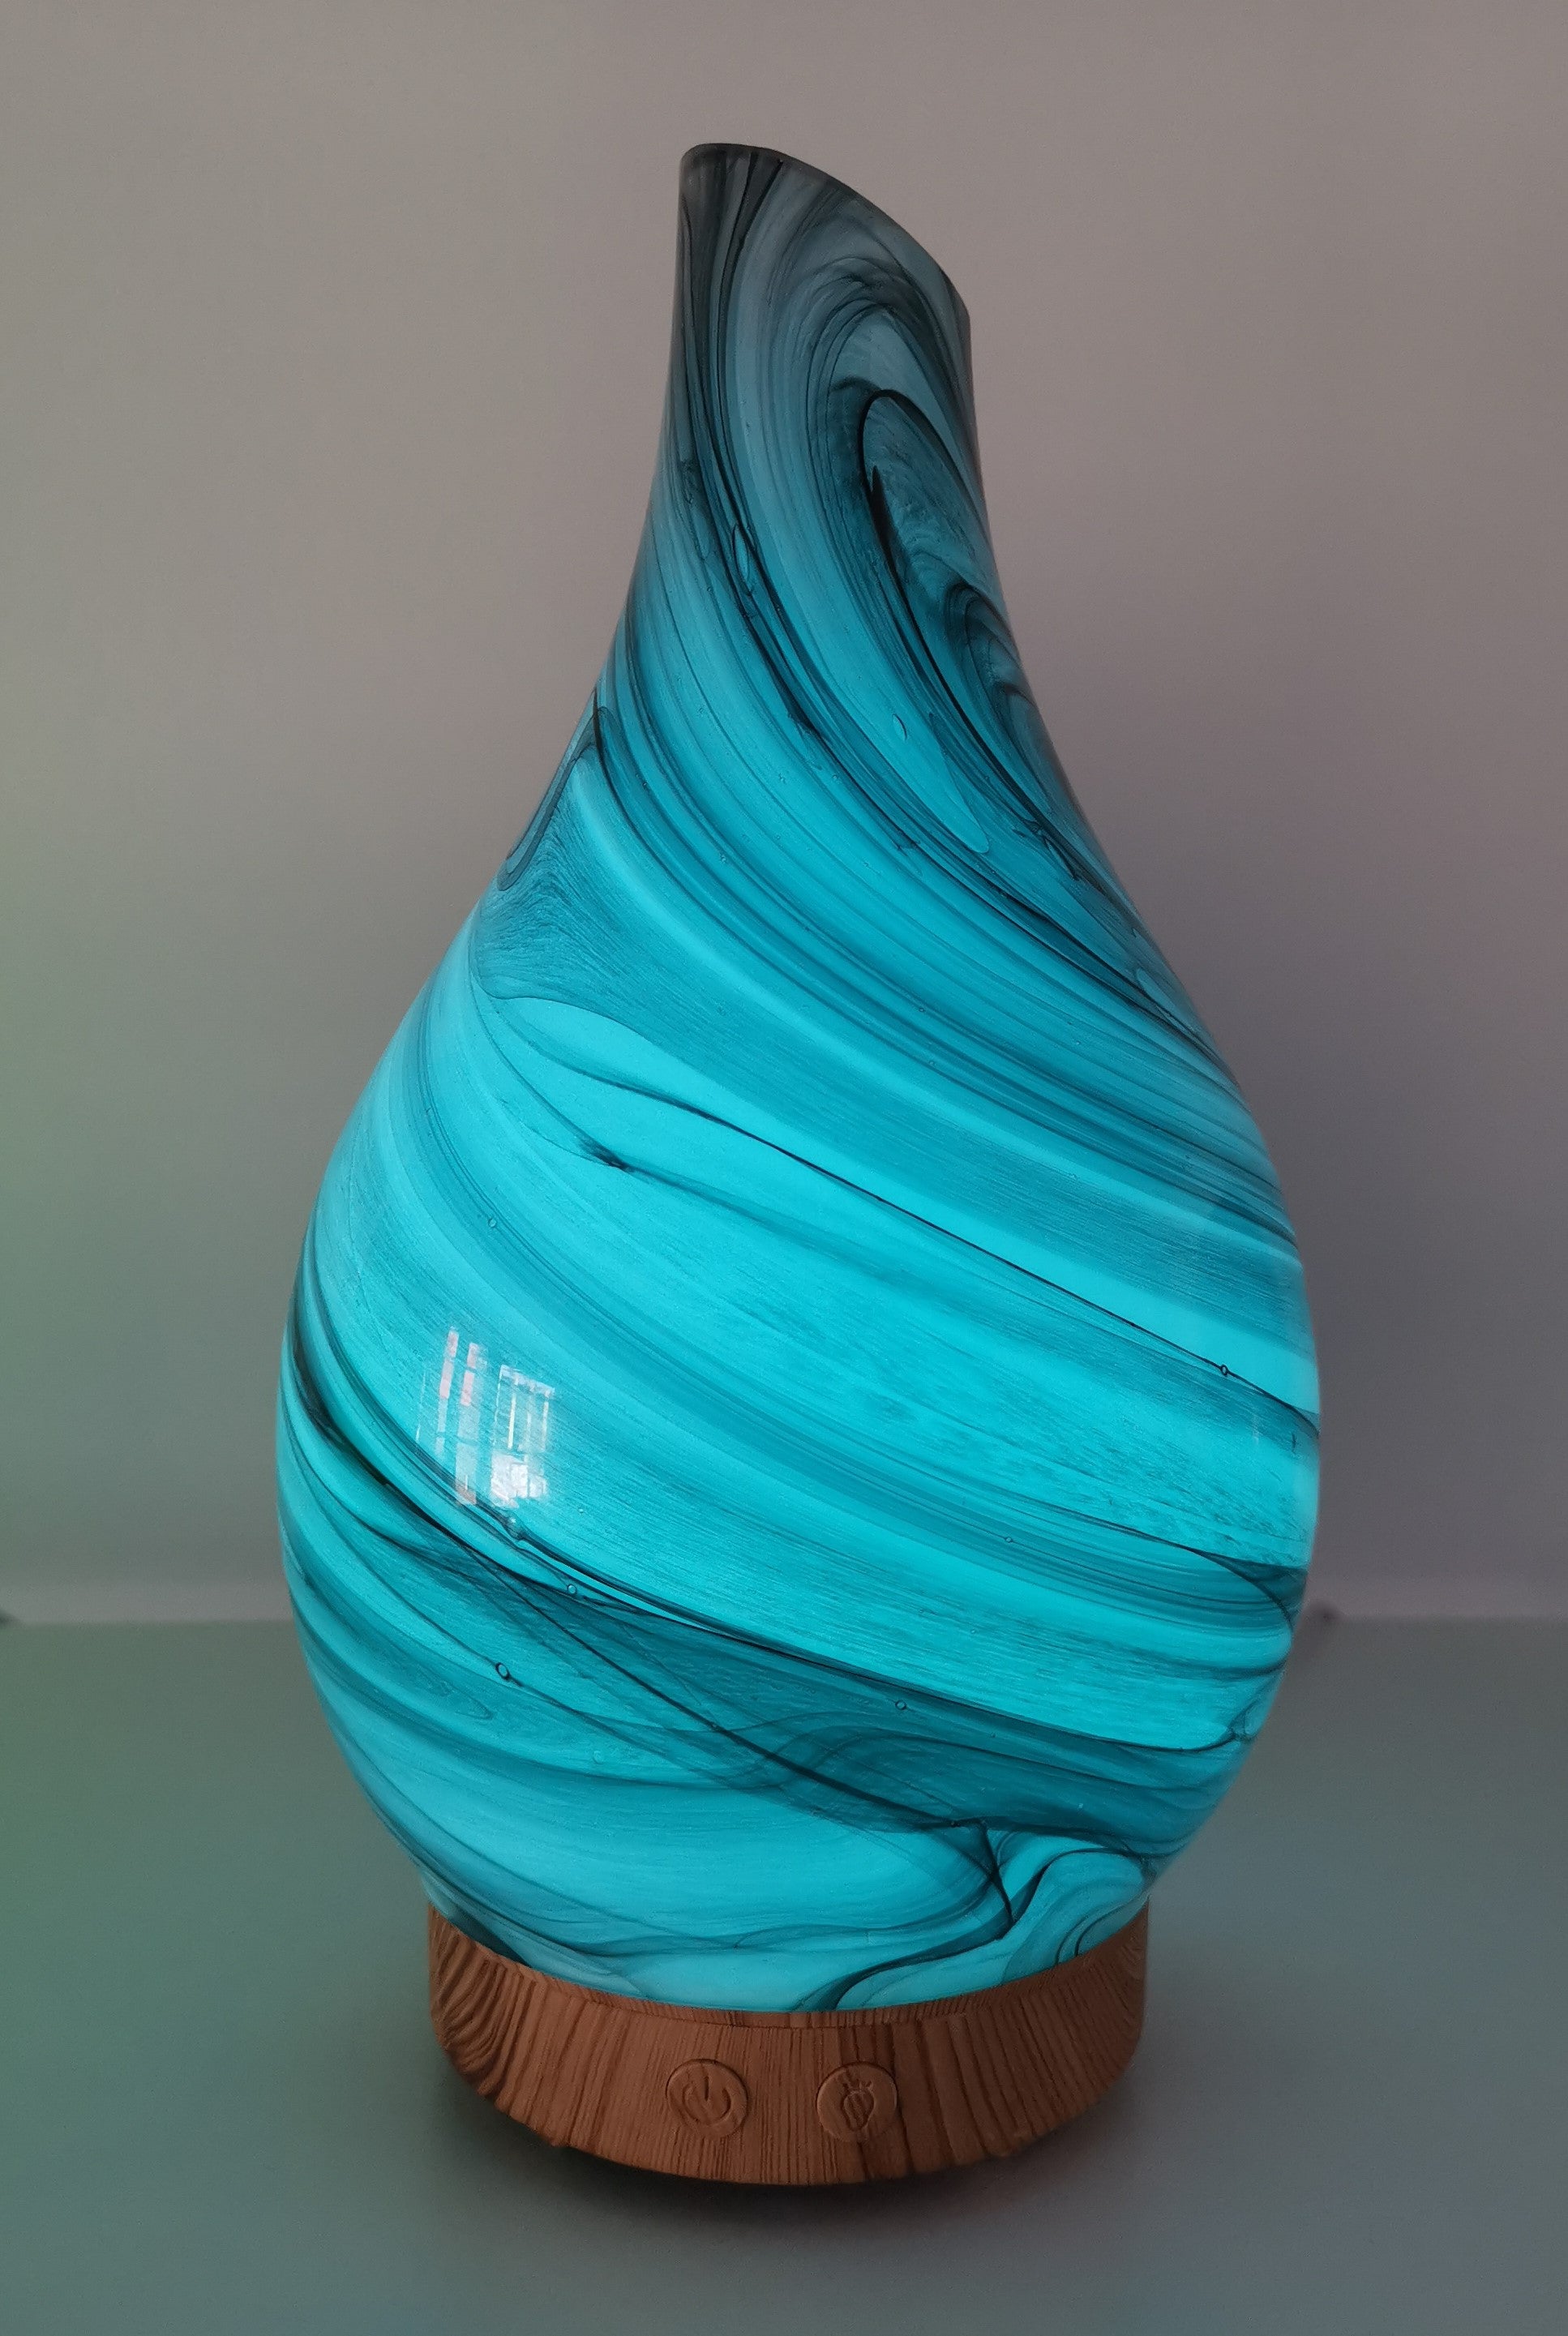 Aroma Diffuser Marble Porcelain Glaze PR-67A